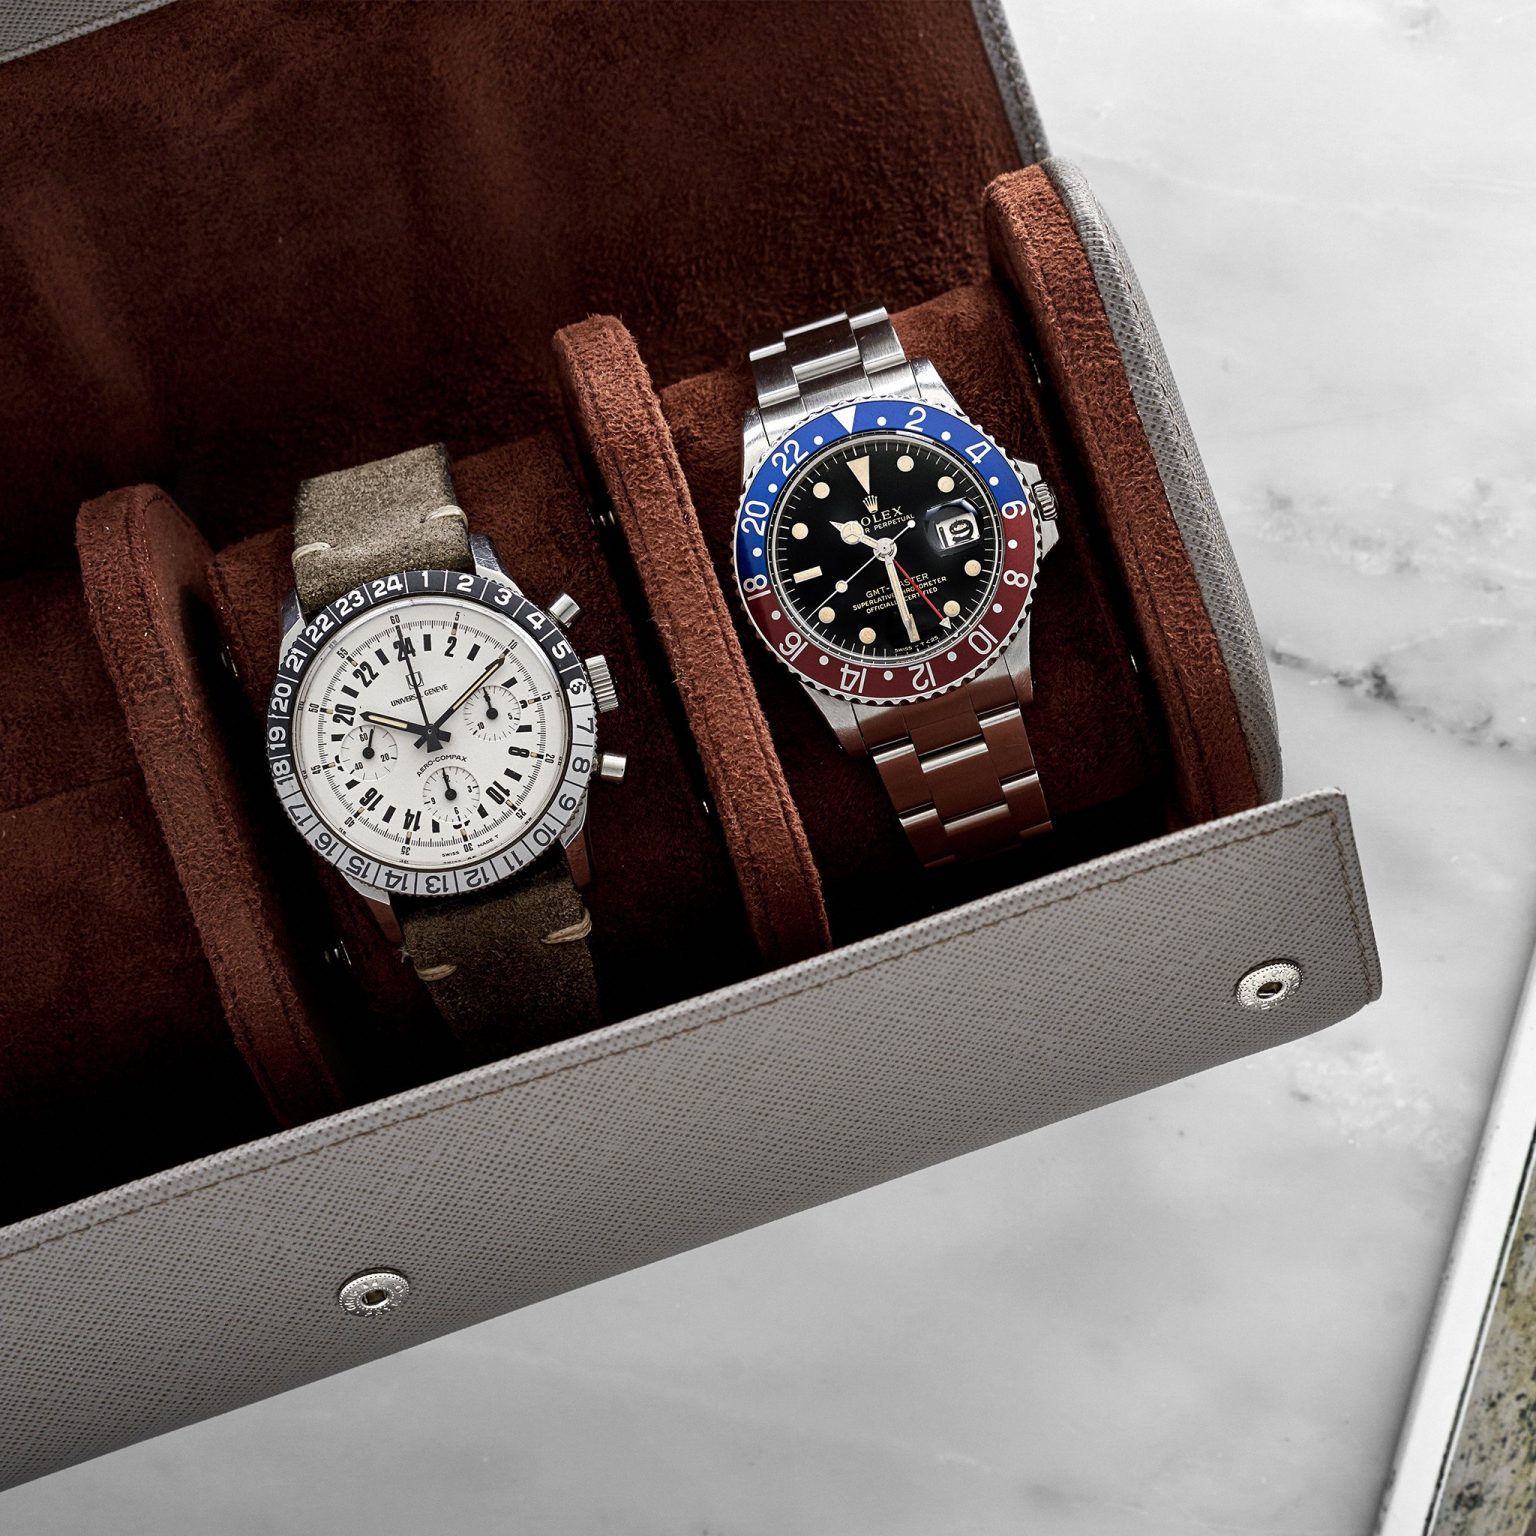 18 Best Travel Watch Cases for a Rolex Journeyz